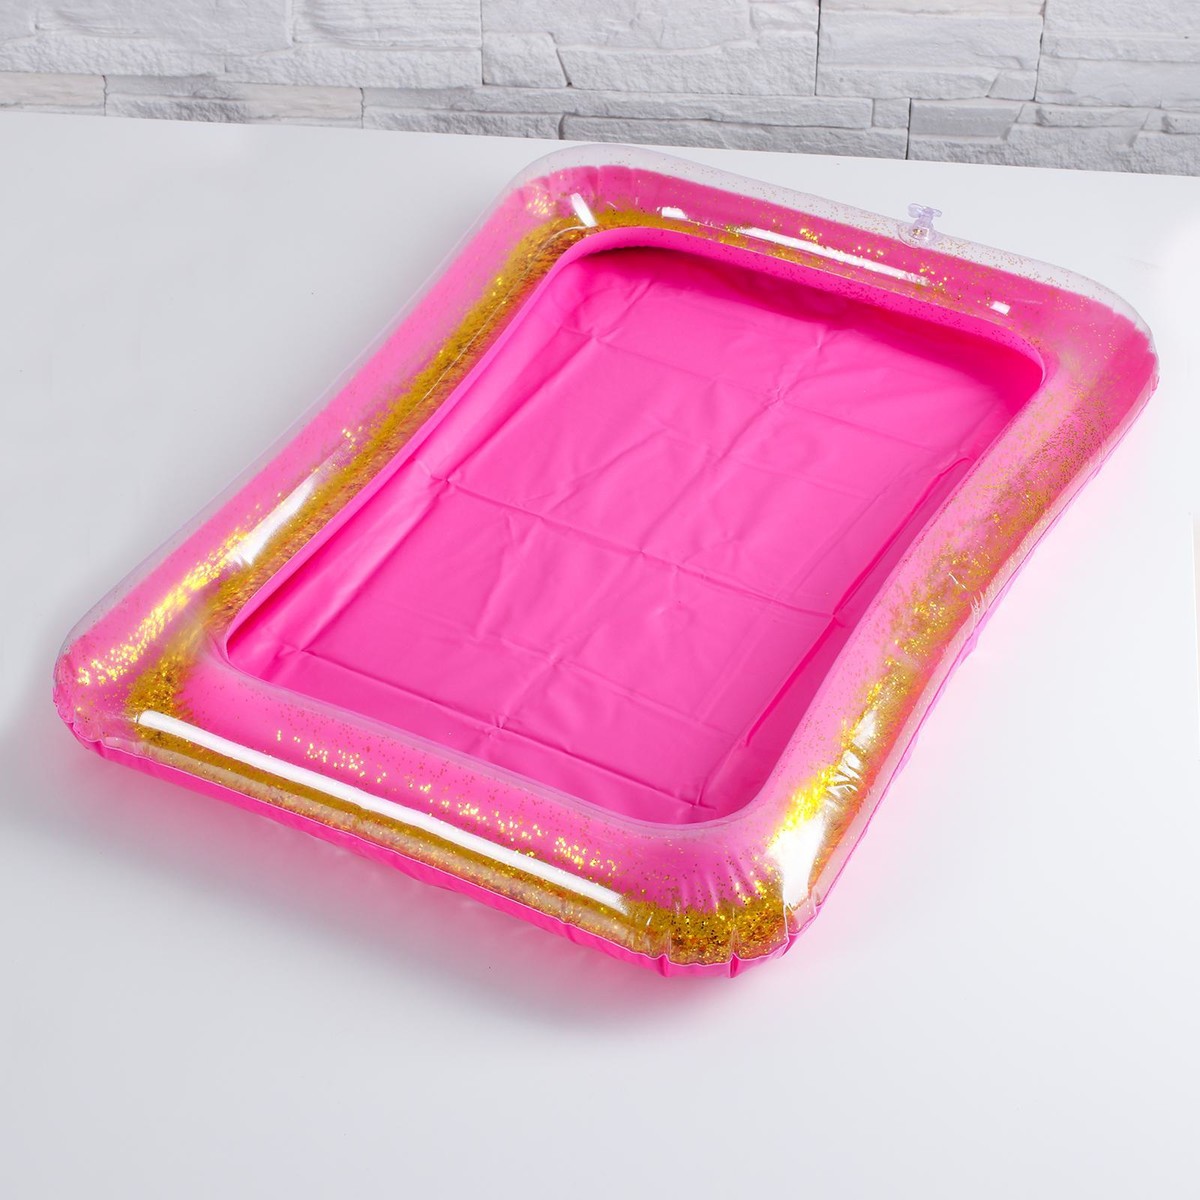 Надувная песочница с блестками, 60х45 см, цвет ярко-розовый надувная песочница с блёстками 60х45 см розовый